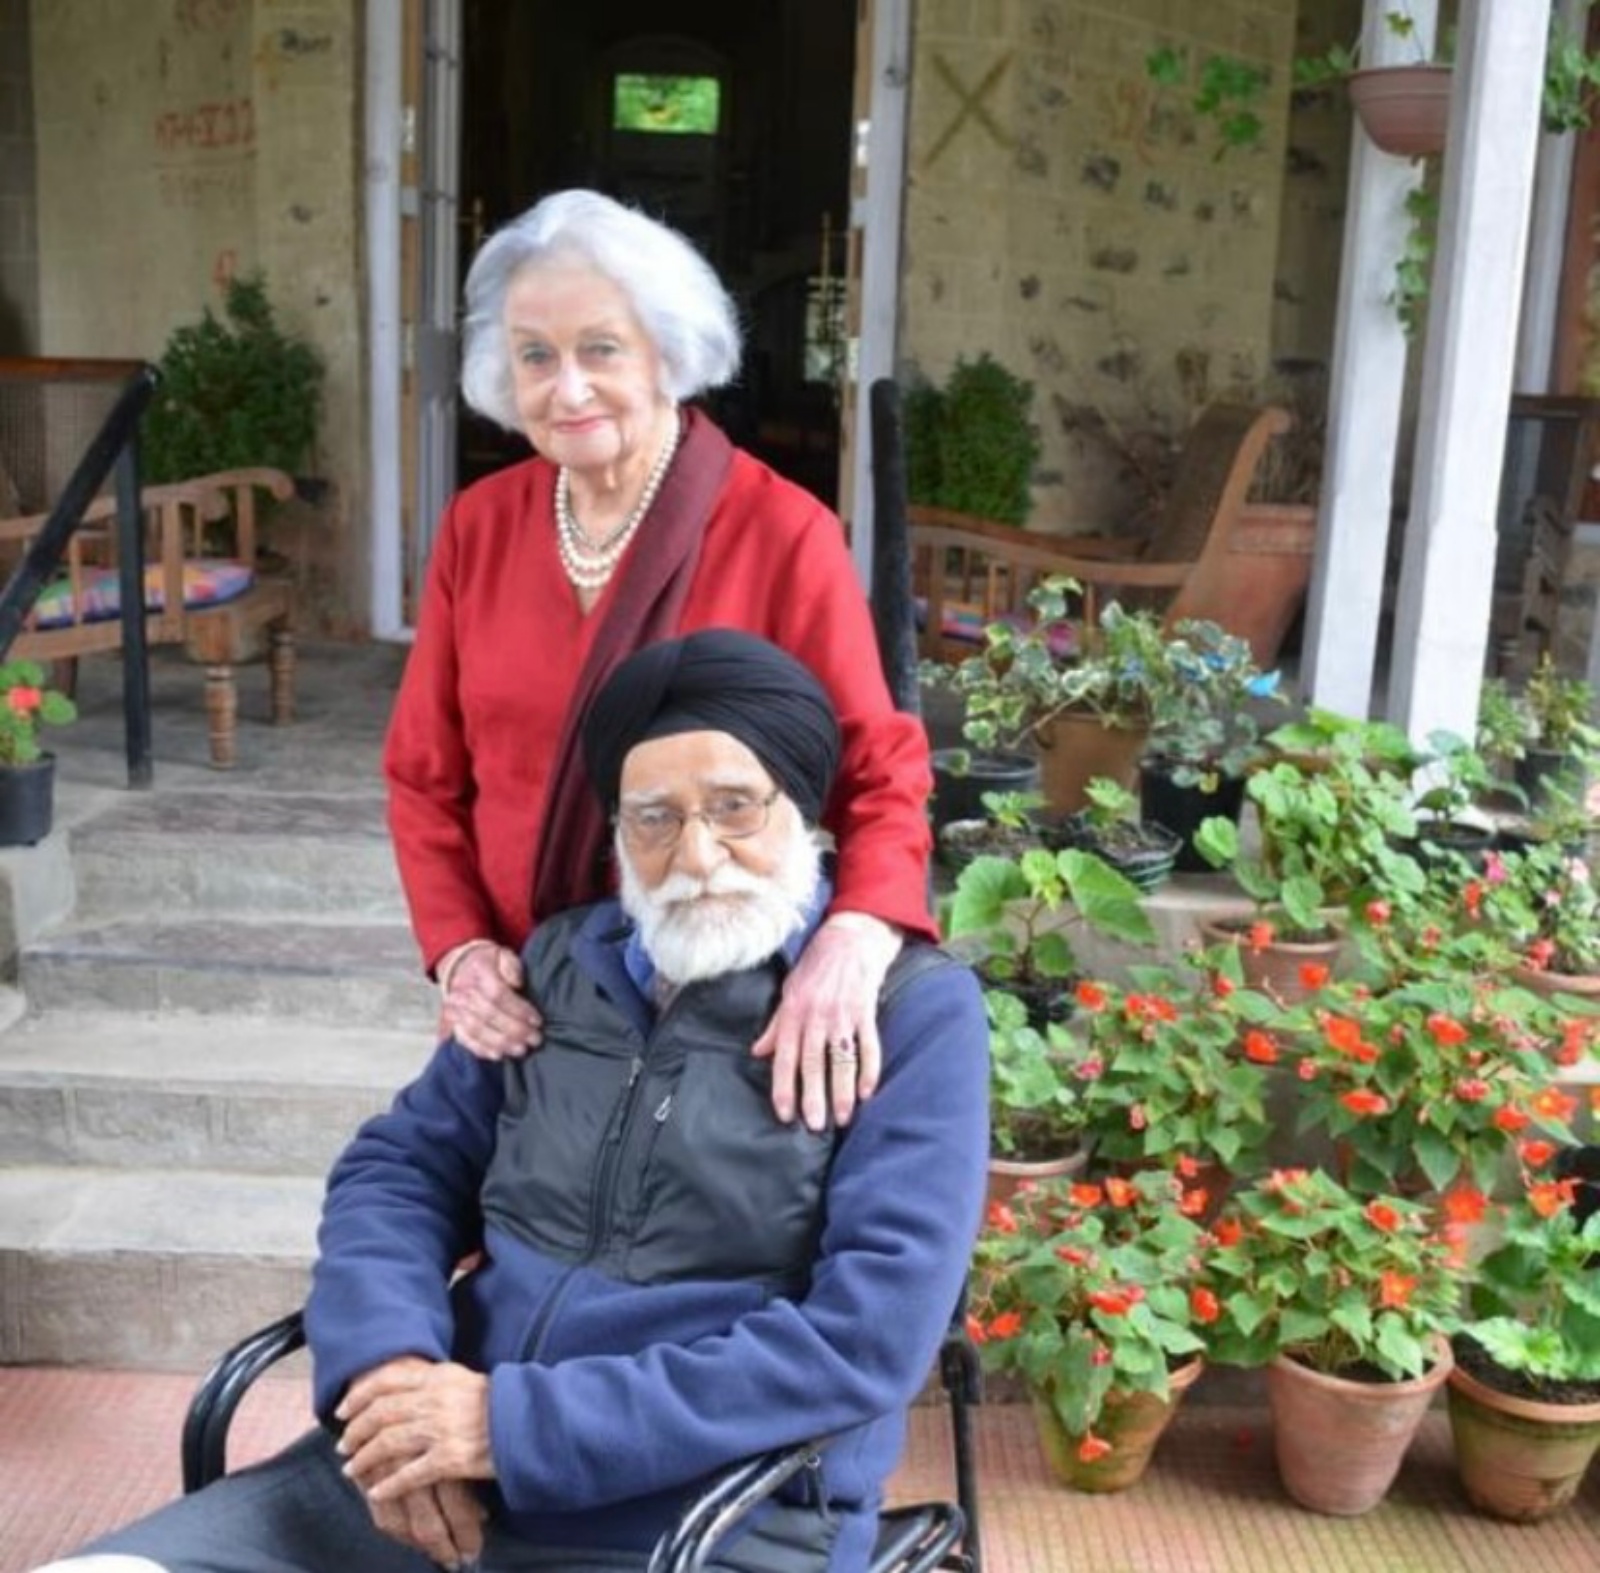 Dalip Singh Majithia and his wife Joan Sanders Majithia